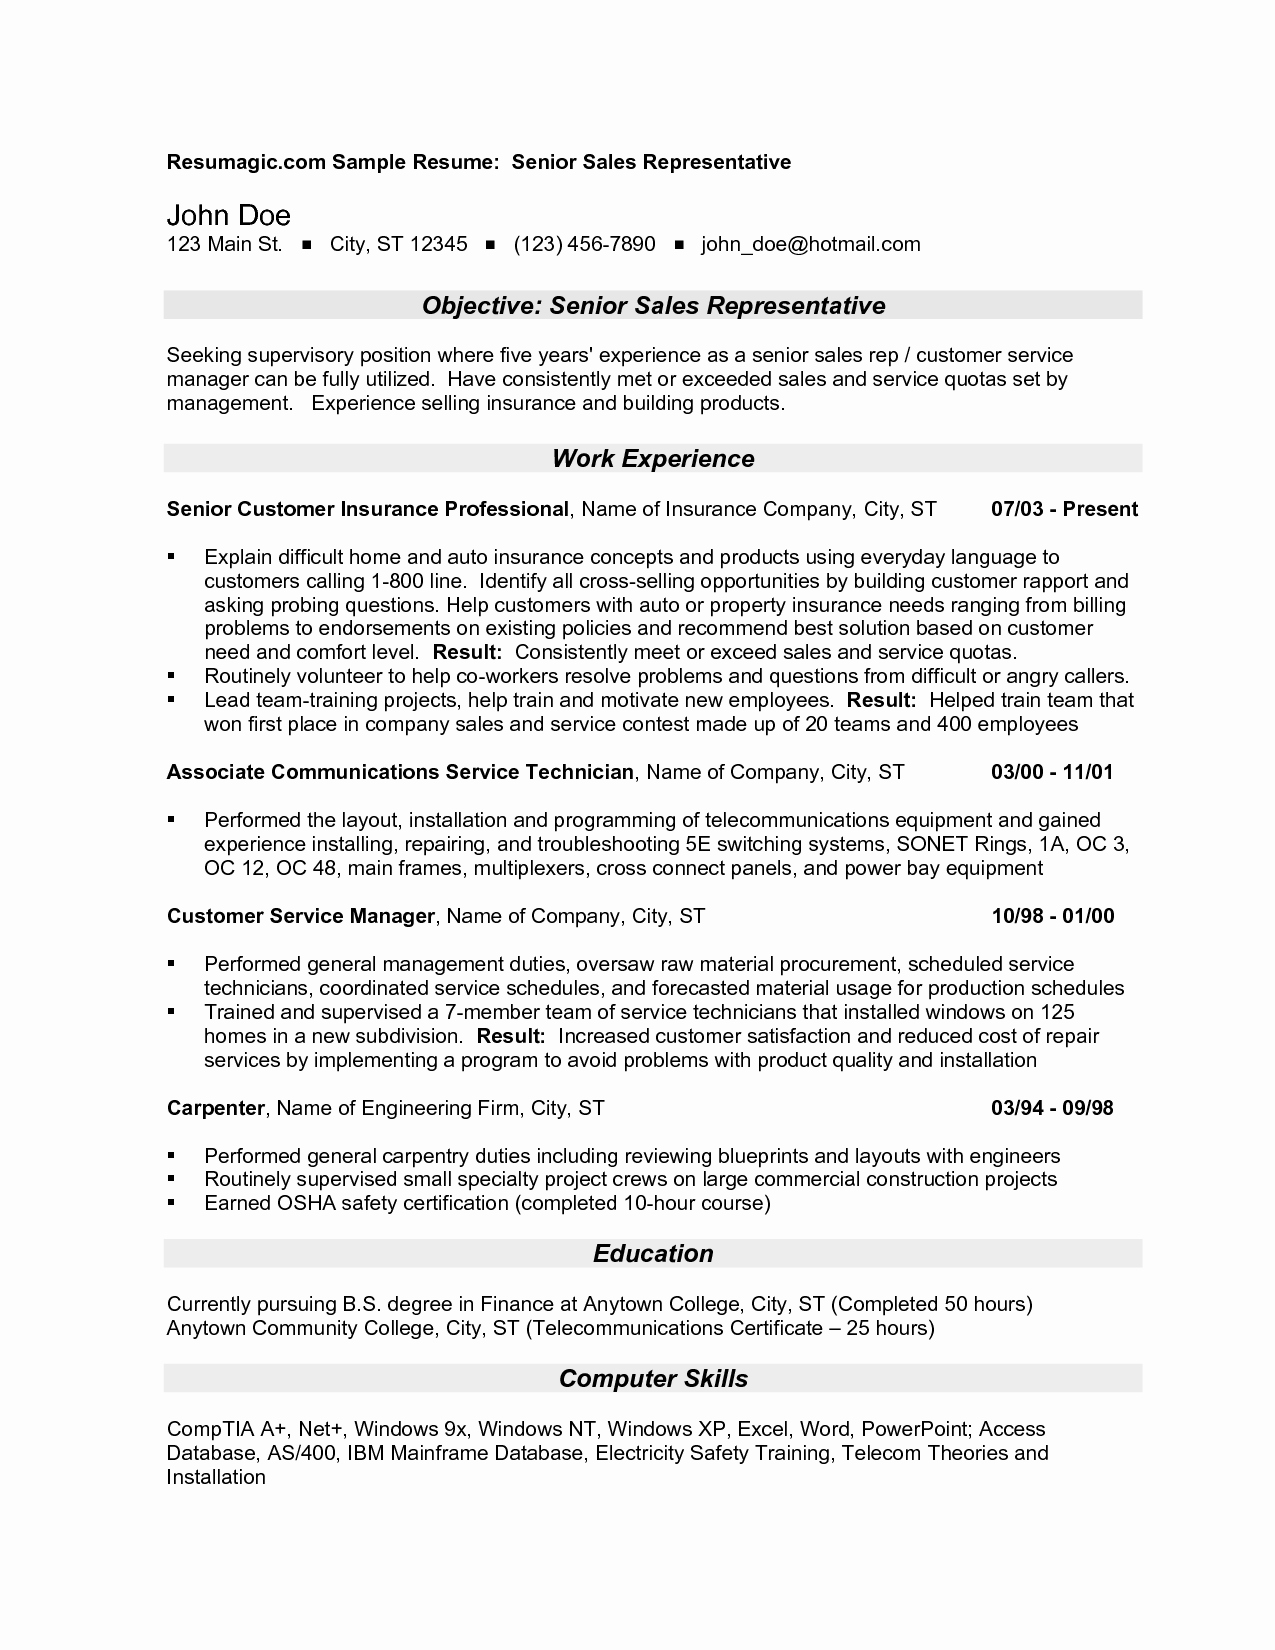 Resume for Wine Sales Outside Job Responsibilities Sample